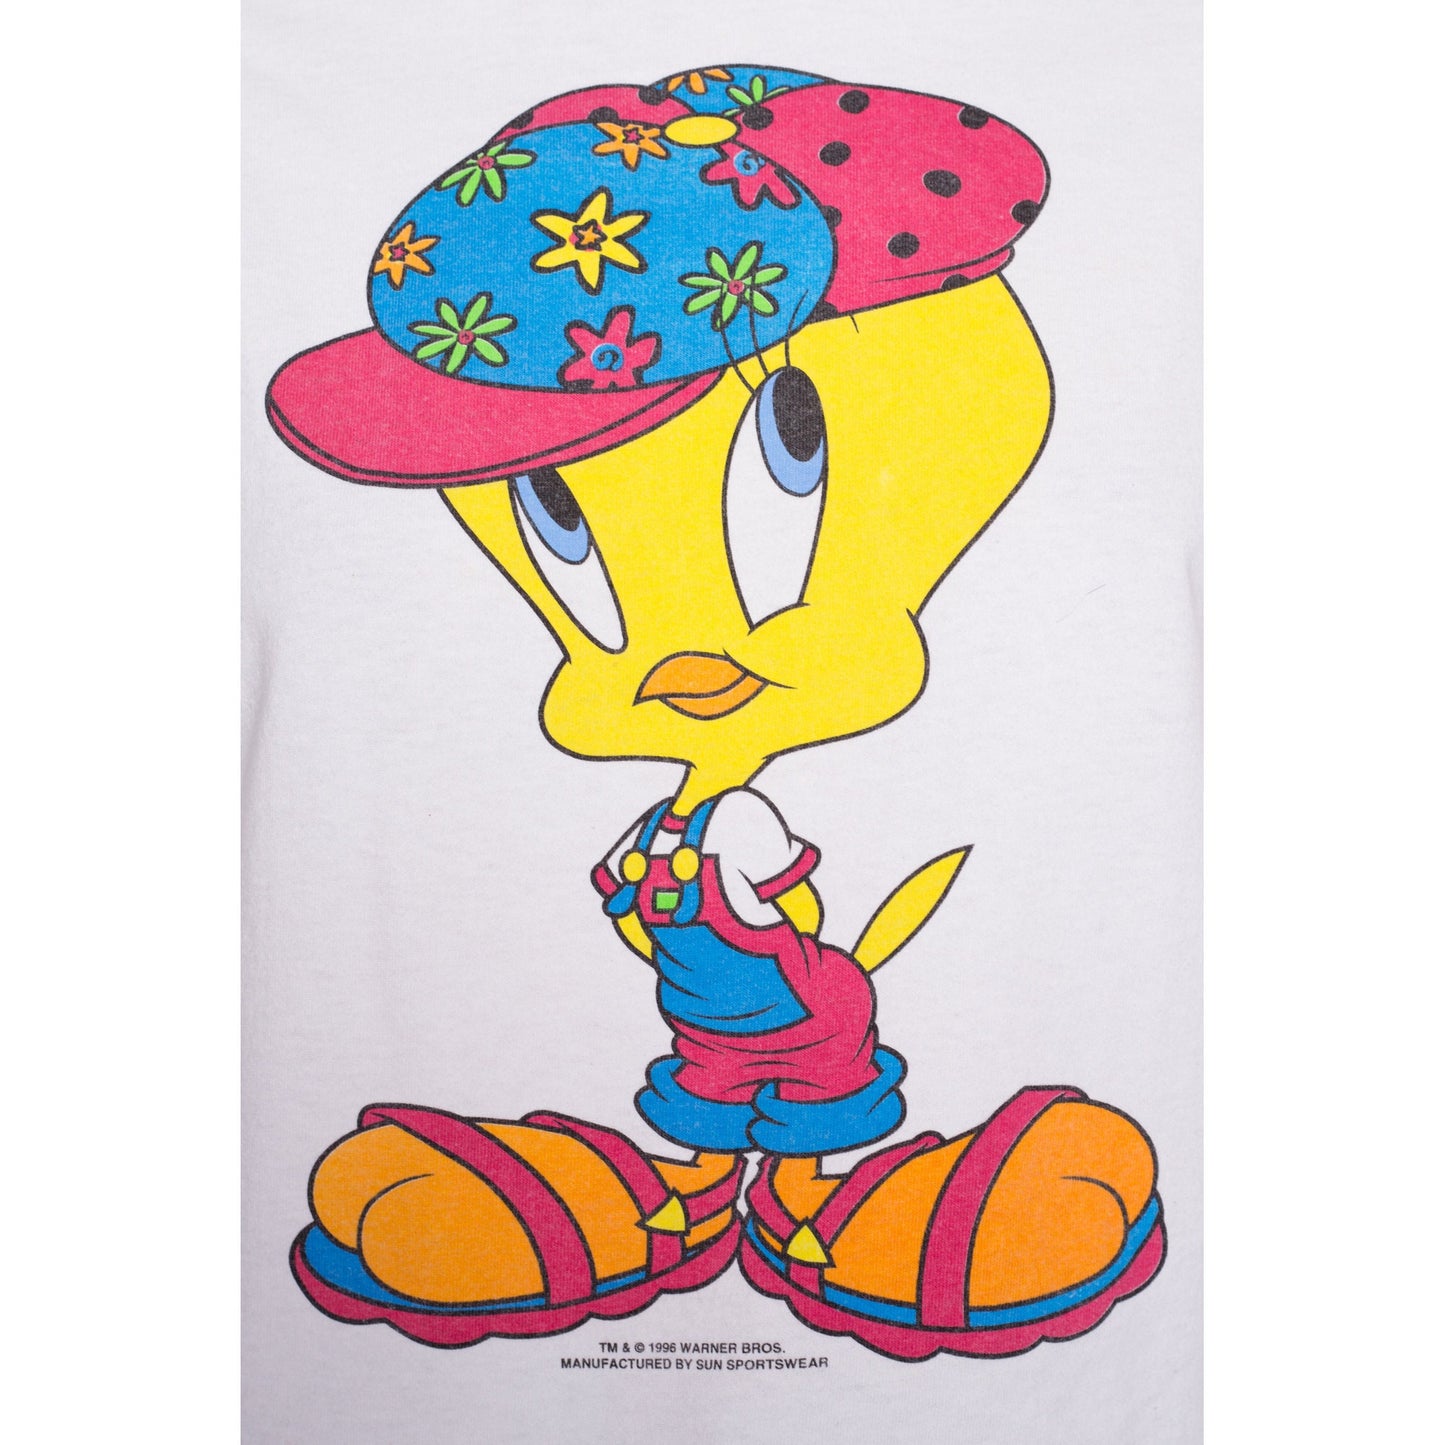 90s Tweety Bird Long Sleeve Tee - XS to Small | Vintage Looney Tunes Heart Graphic Cartoon Ringer Top